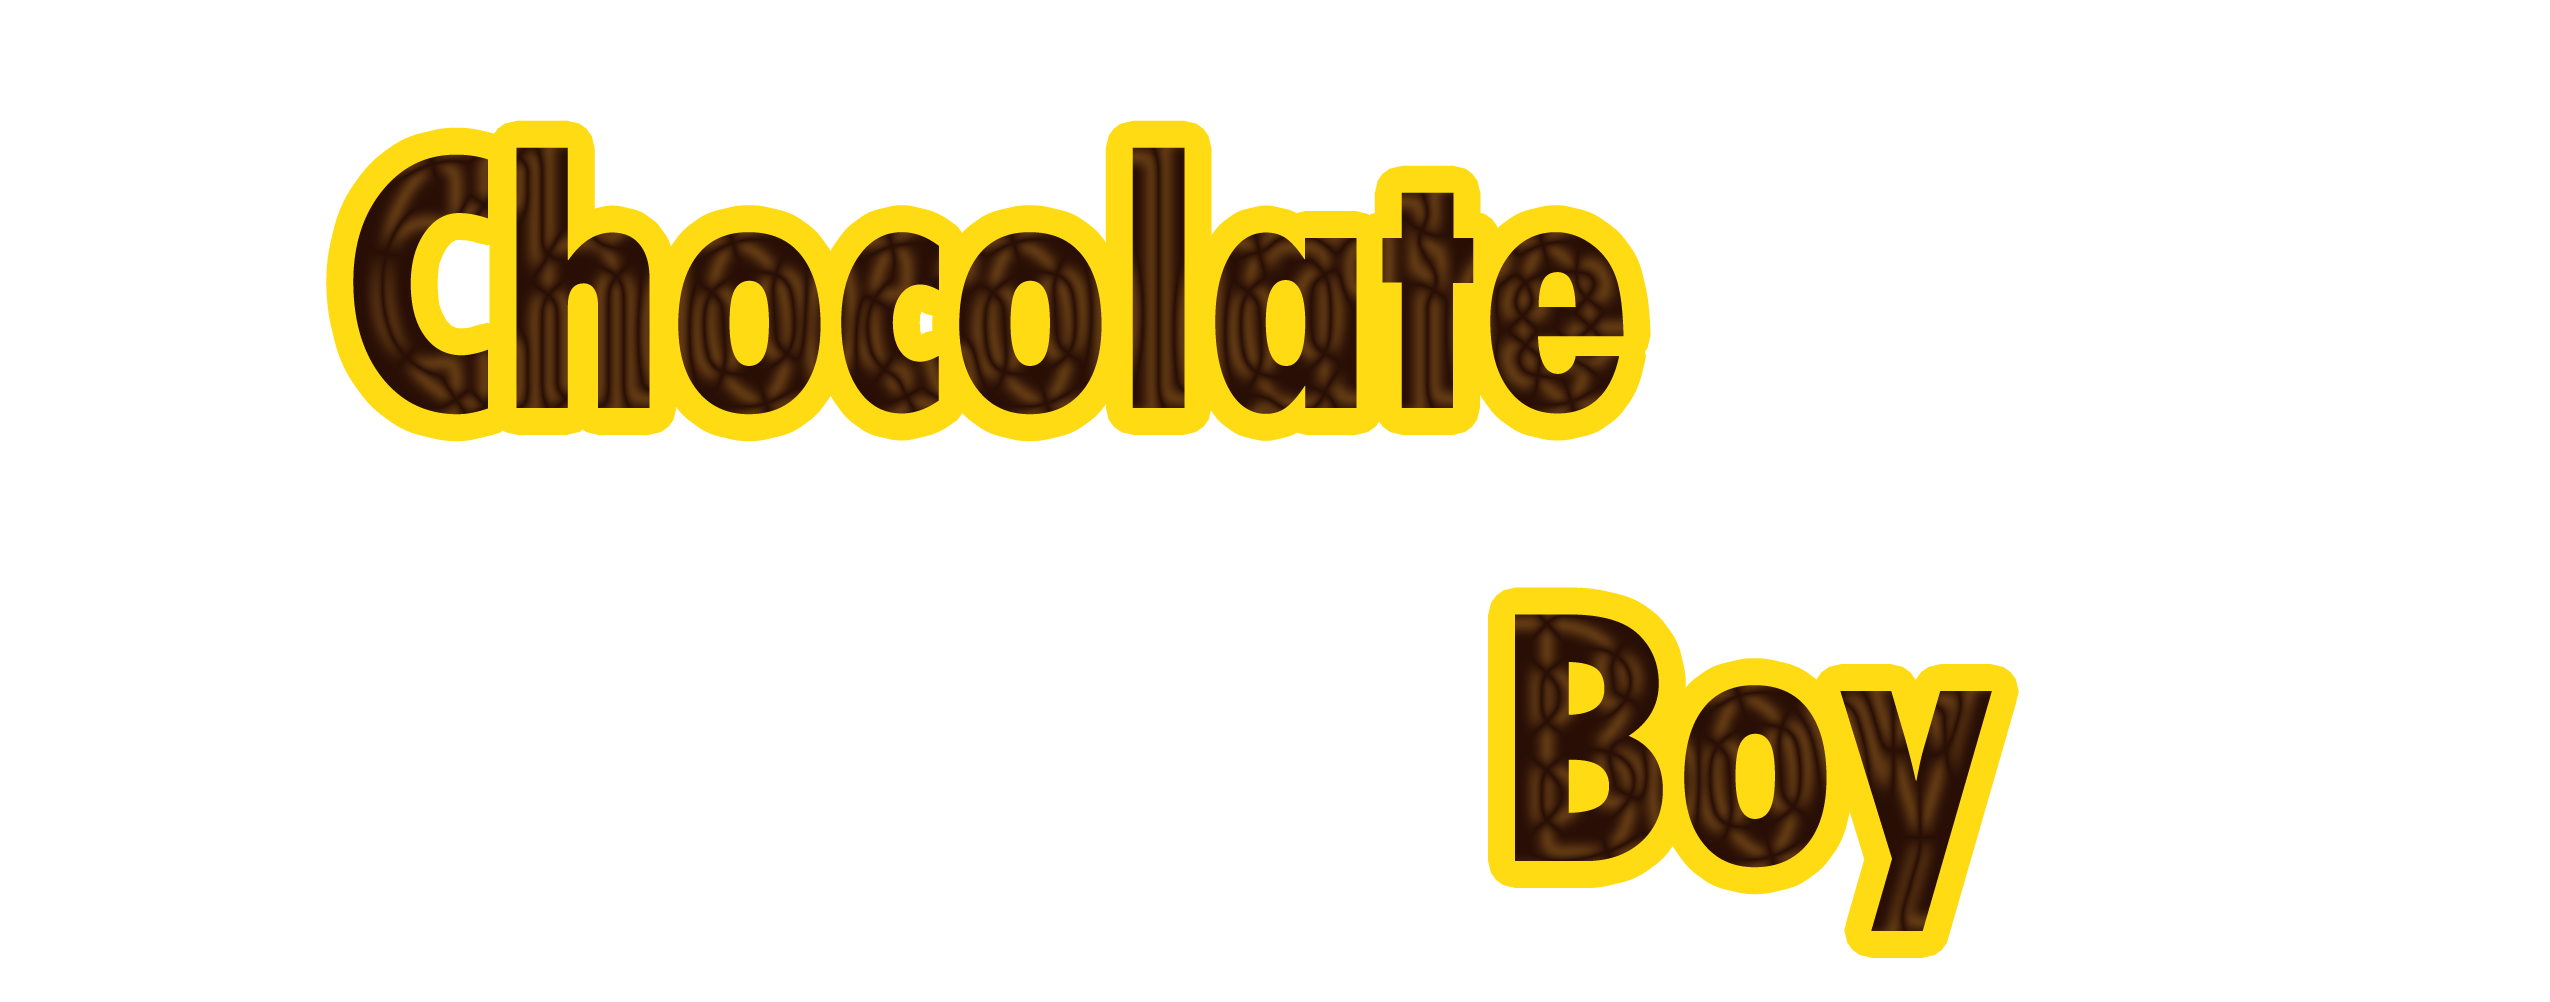 Chocolate Boy #10